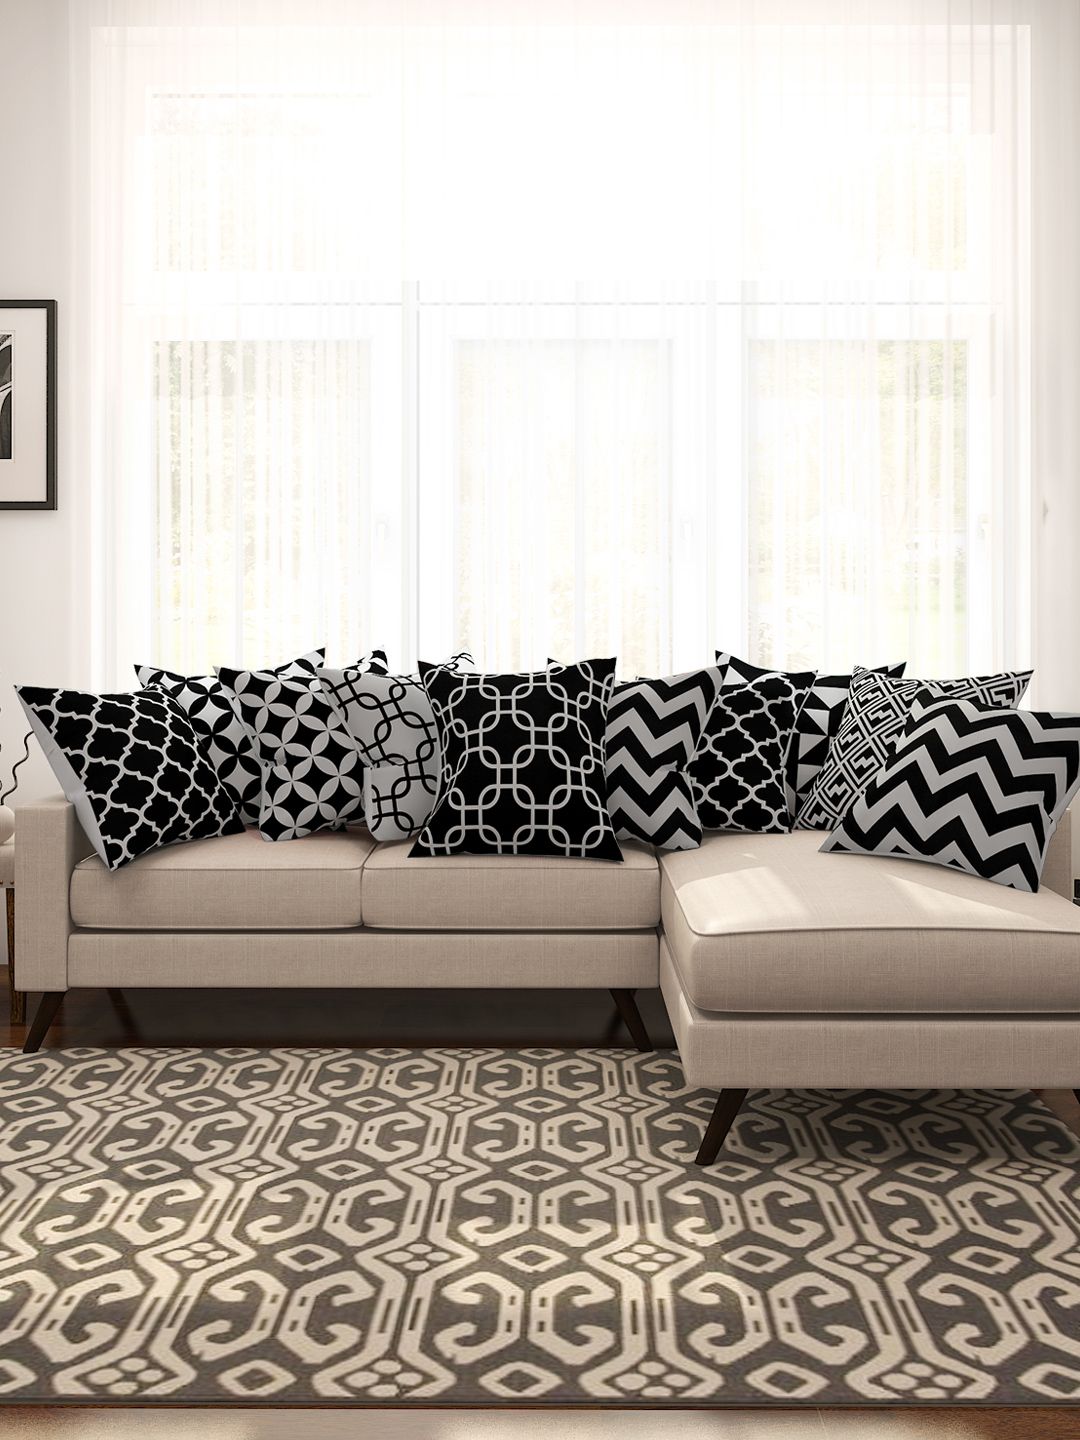 SEJ by Nisha Gupta Black & White Set of 10 Printed 16'' x 16'' Square Cushion Covers Price in India